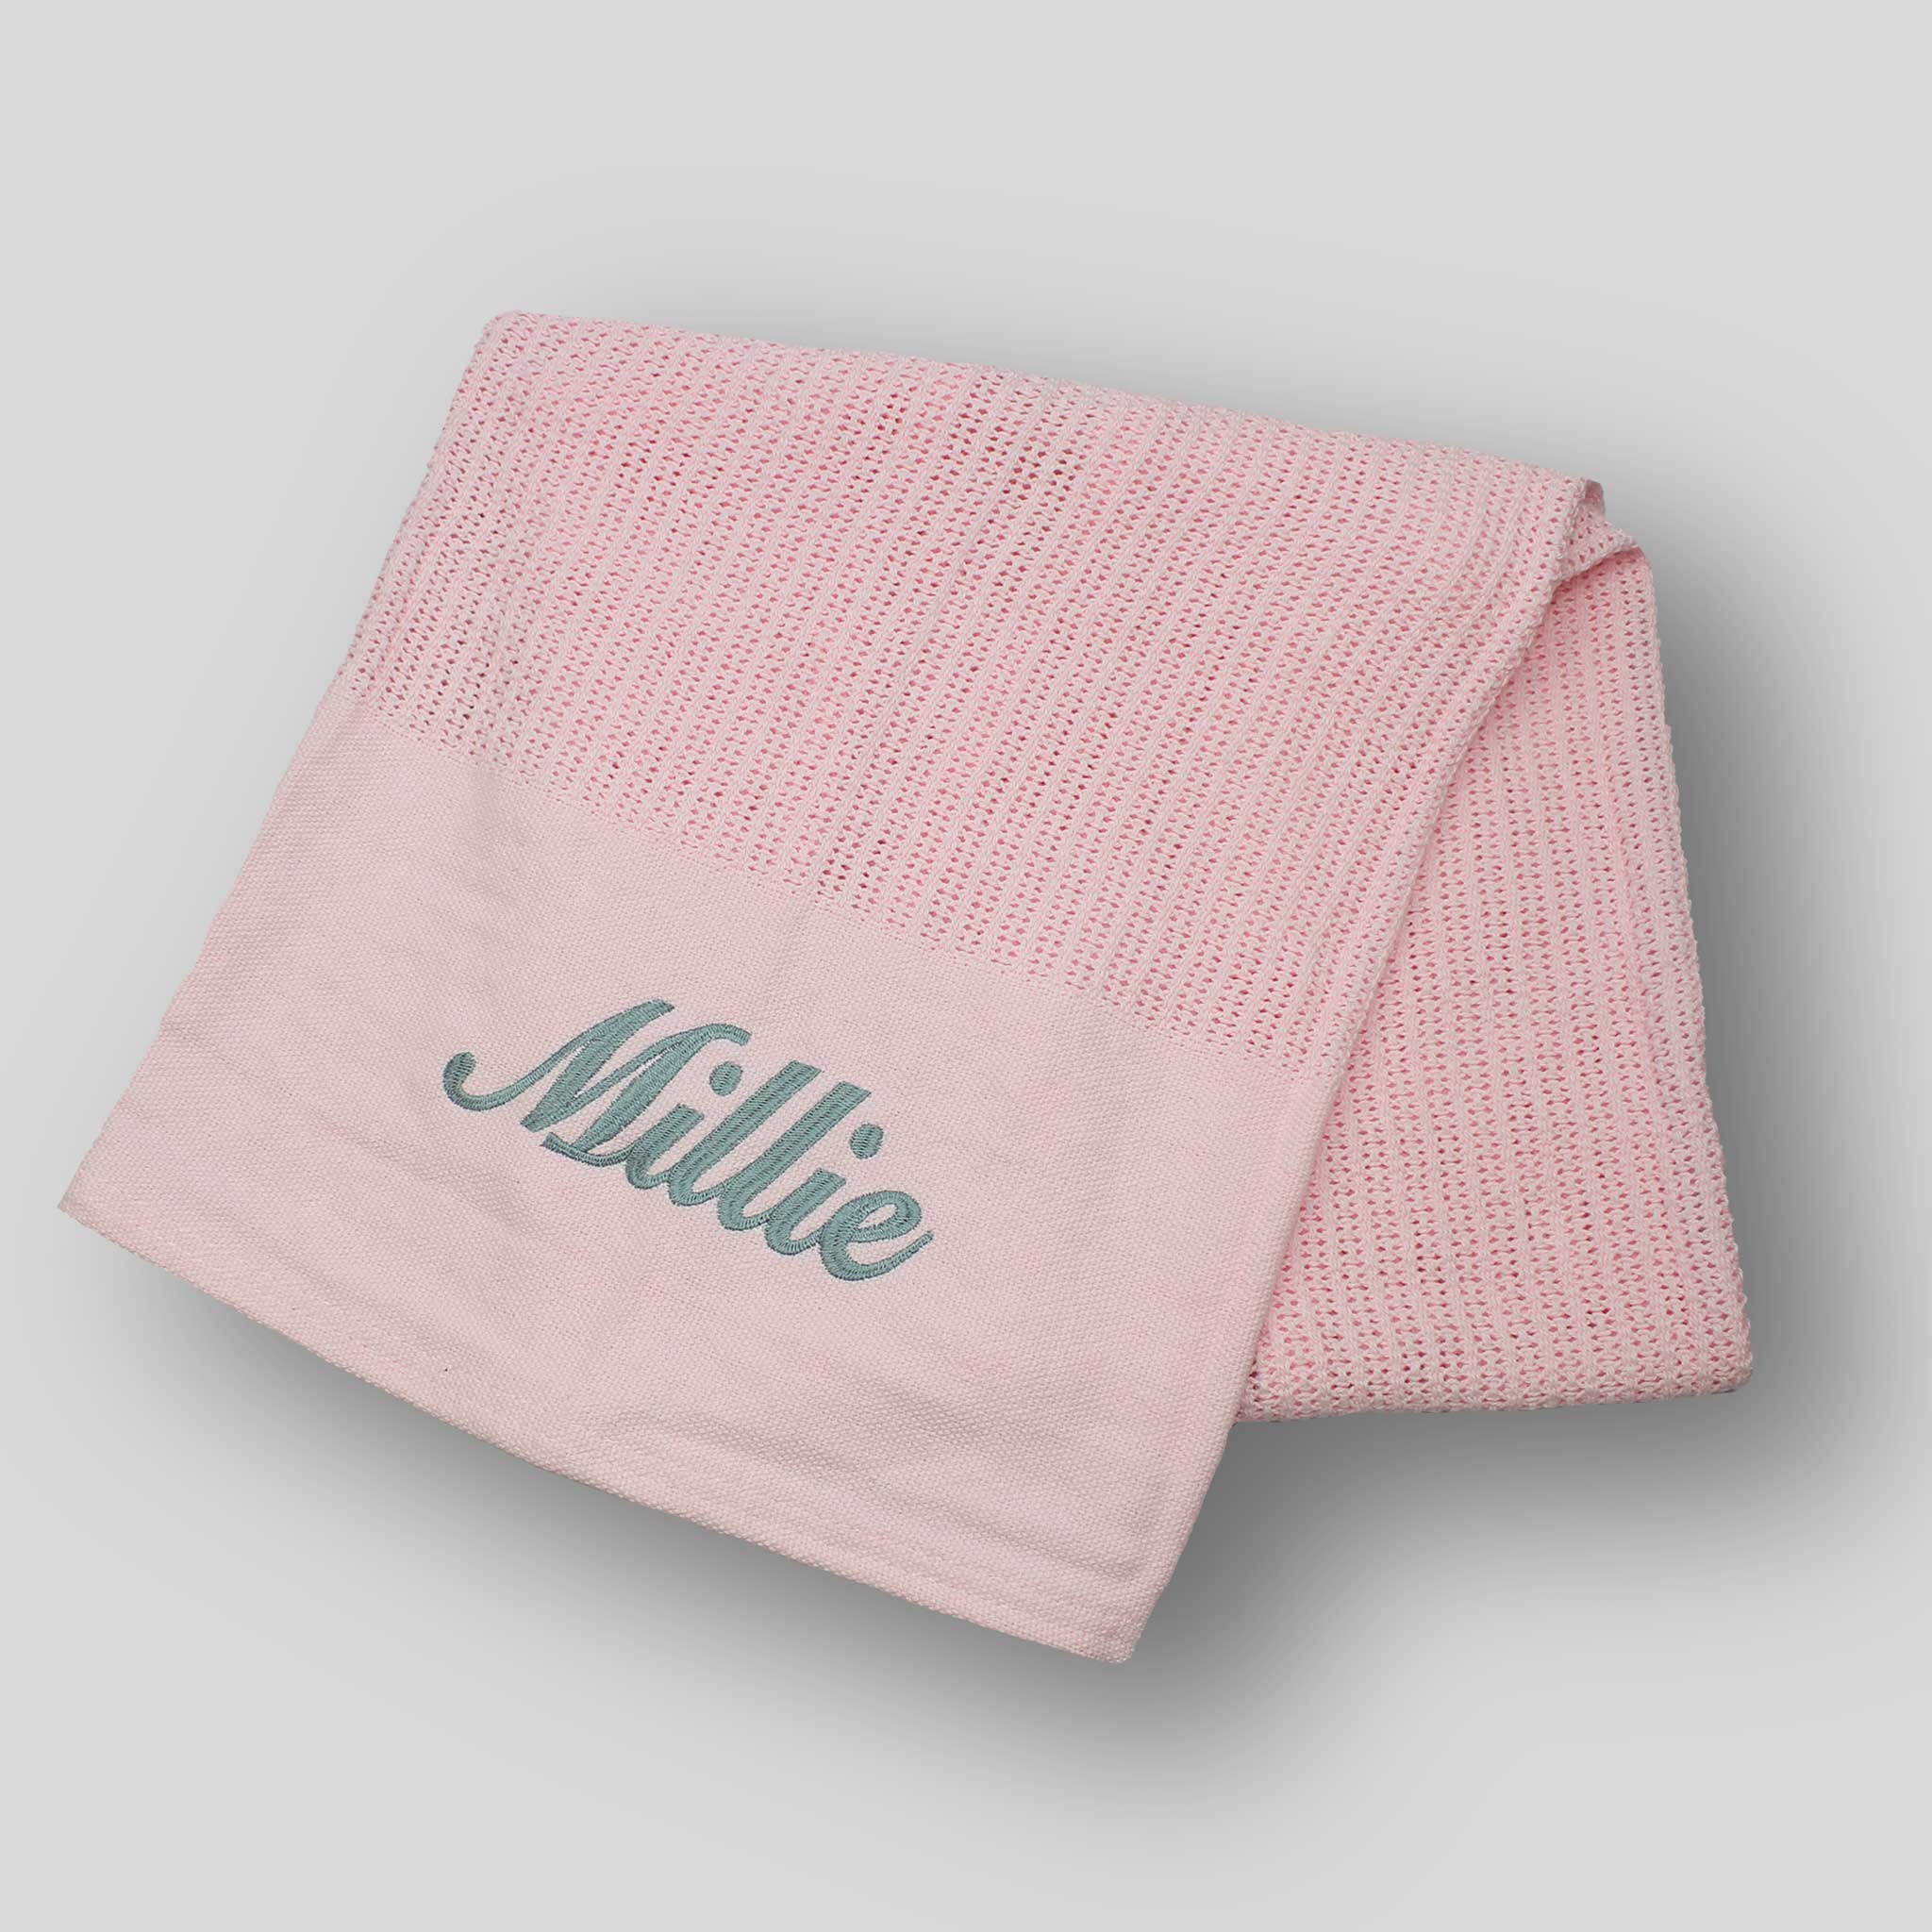 Personalised Cellular Blanket - Pink